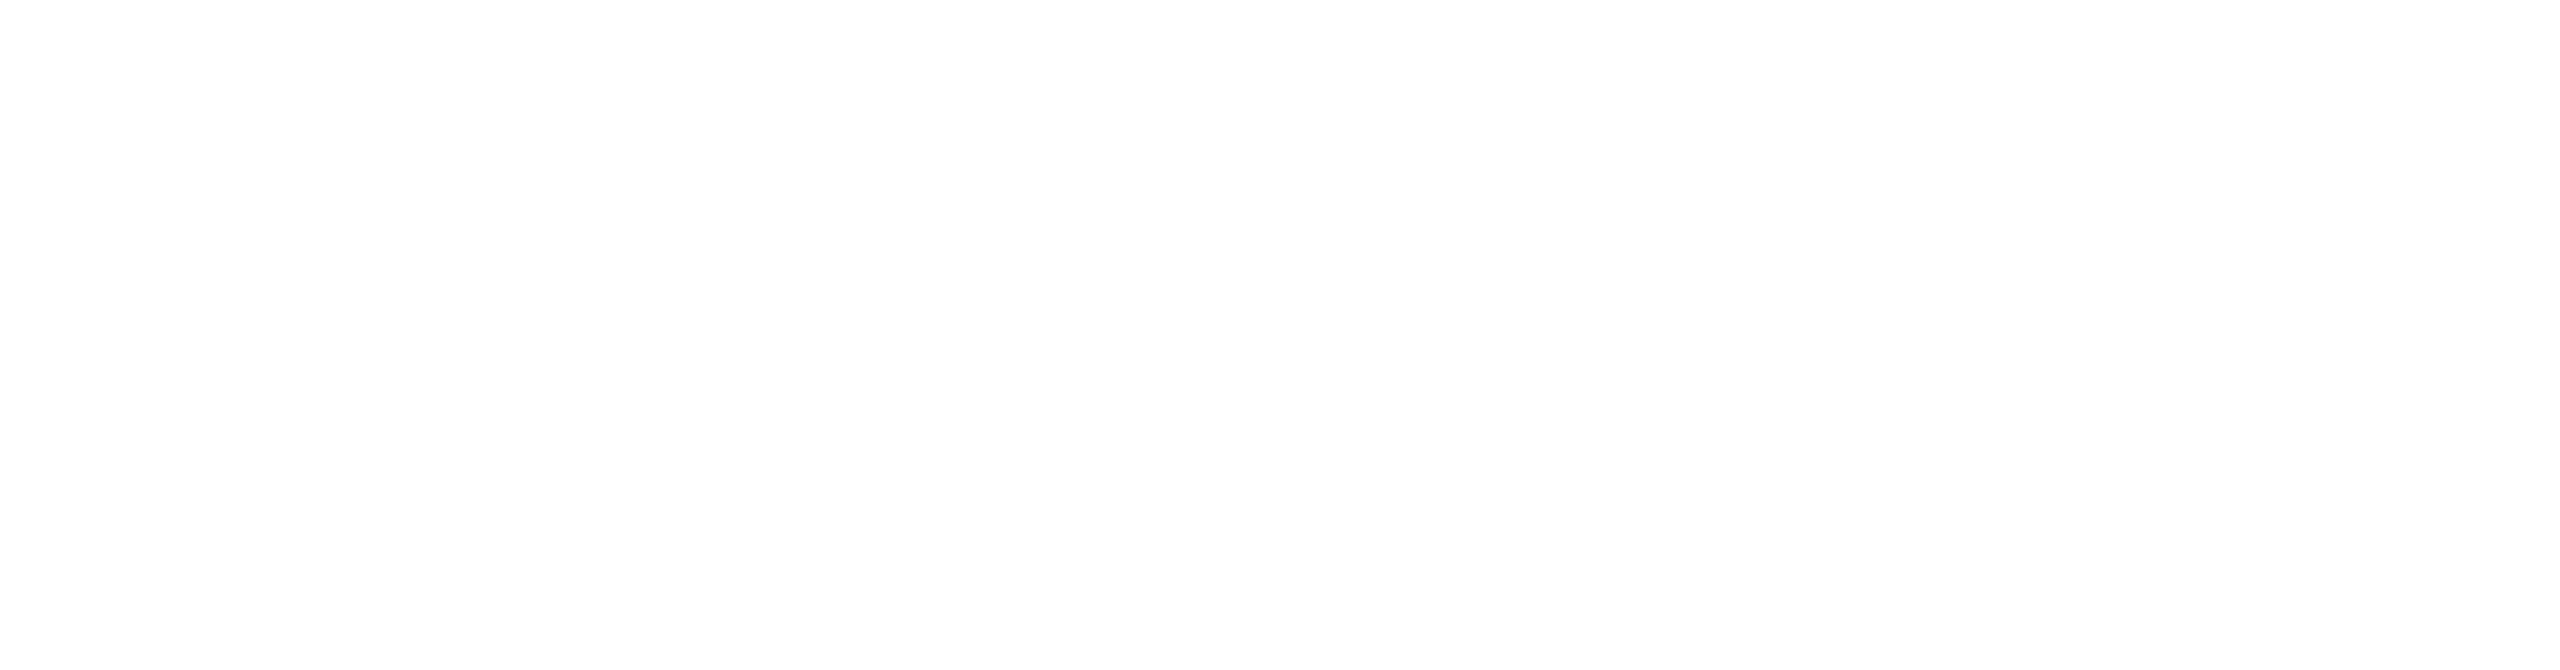 Trimble Wealth Advisors